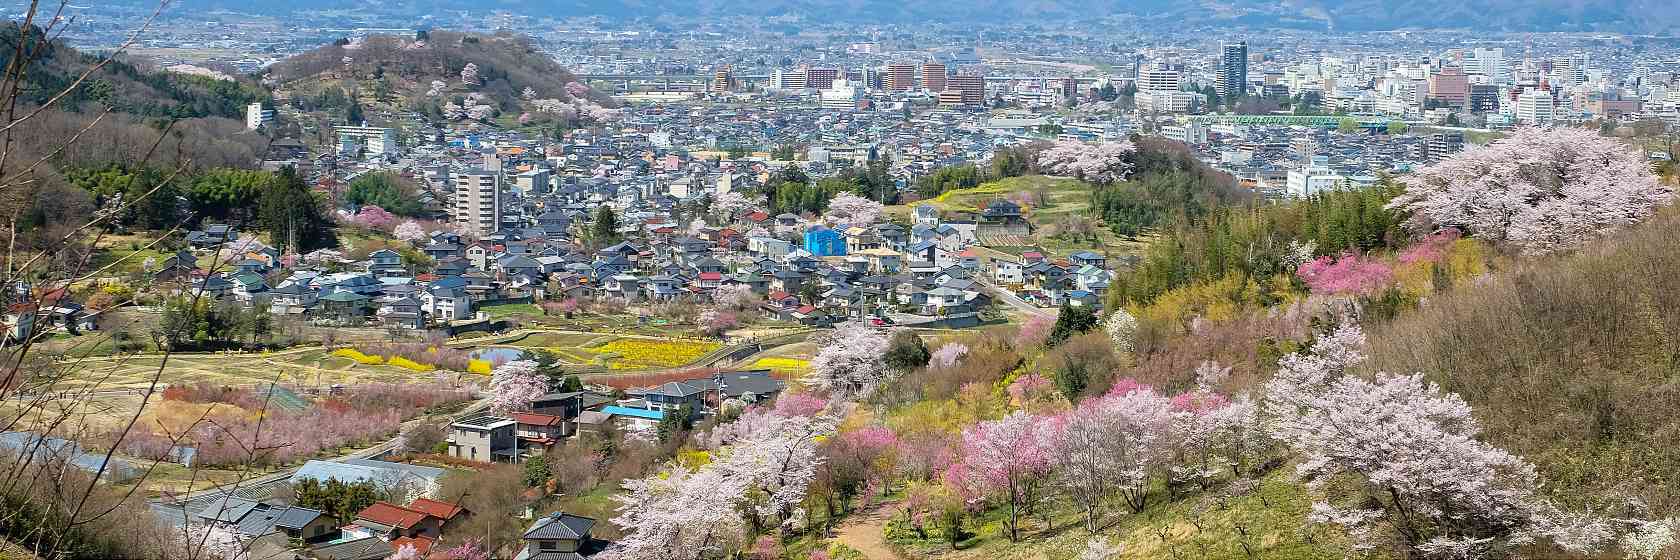 japan tourism fukushima